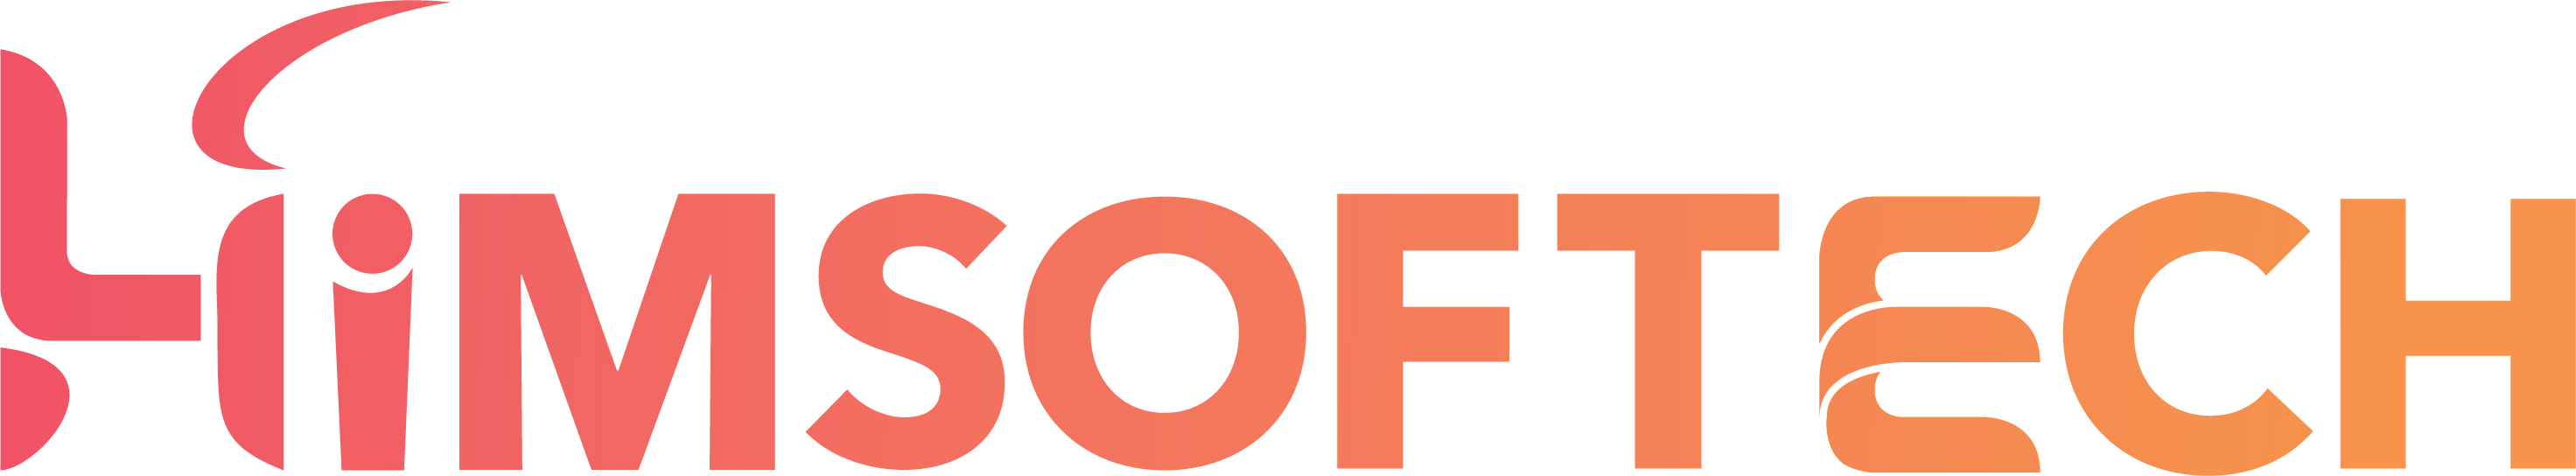 himsoftech logo